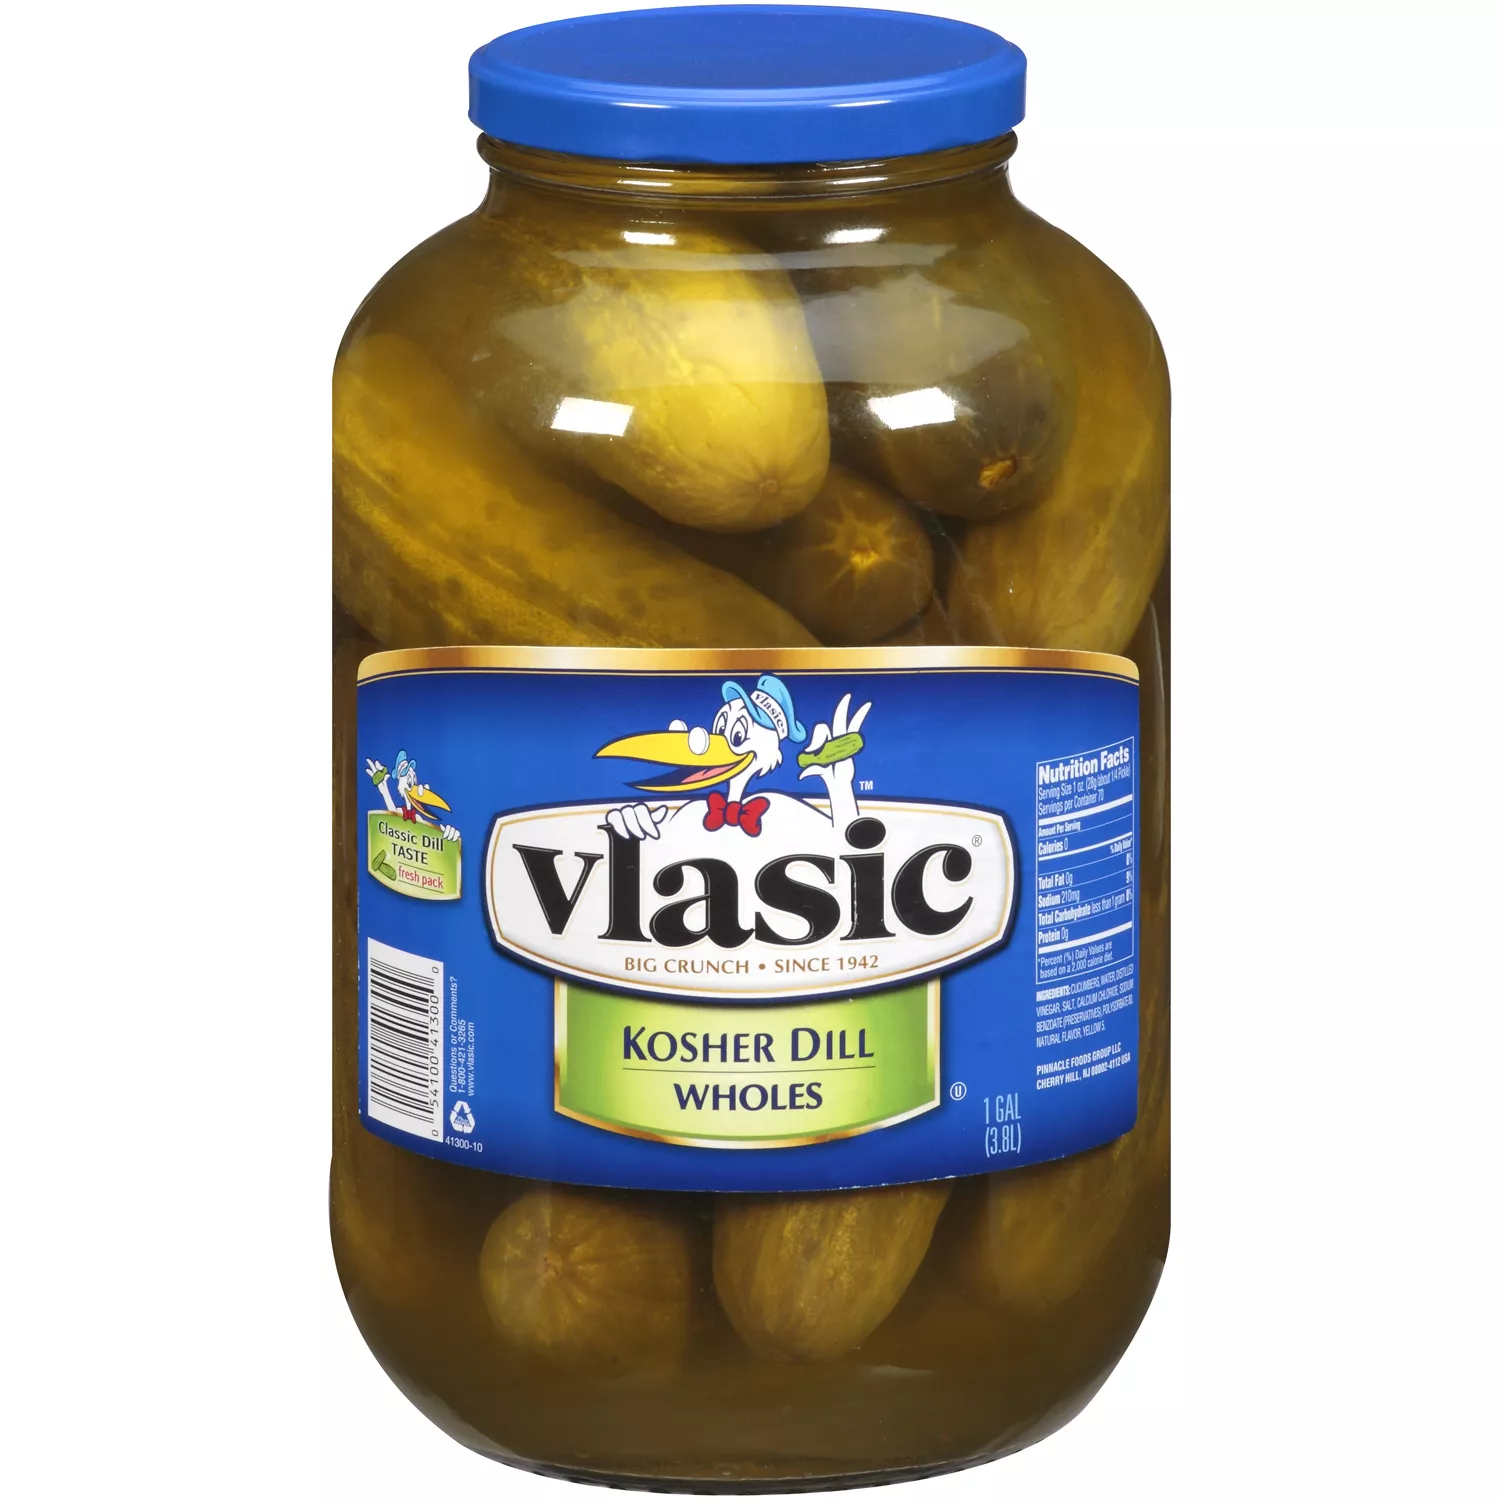 Best vlasic Kosher Dill Wholes (1 gallon jar)